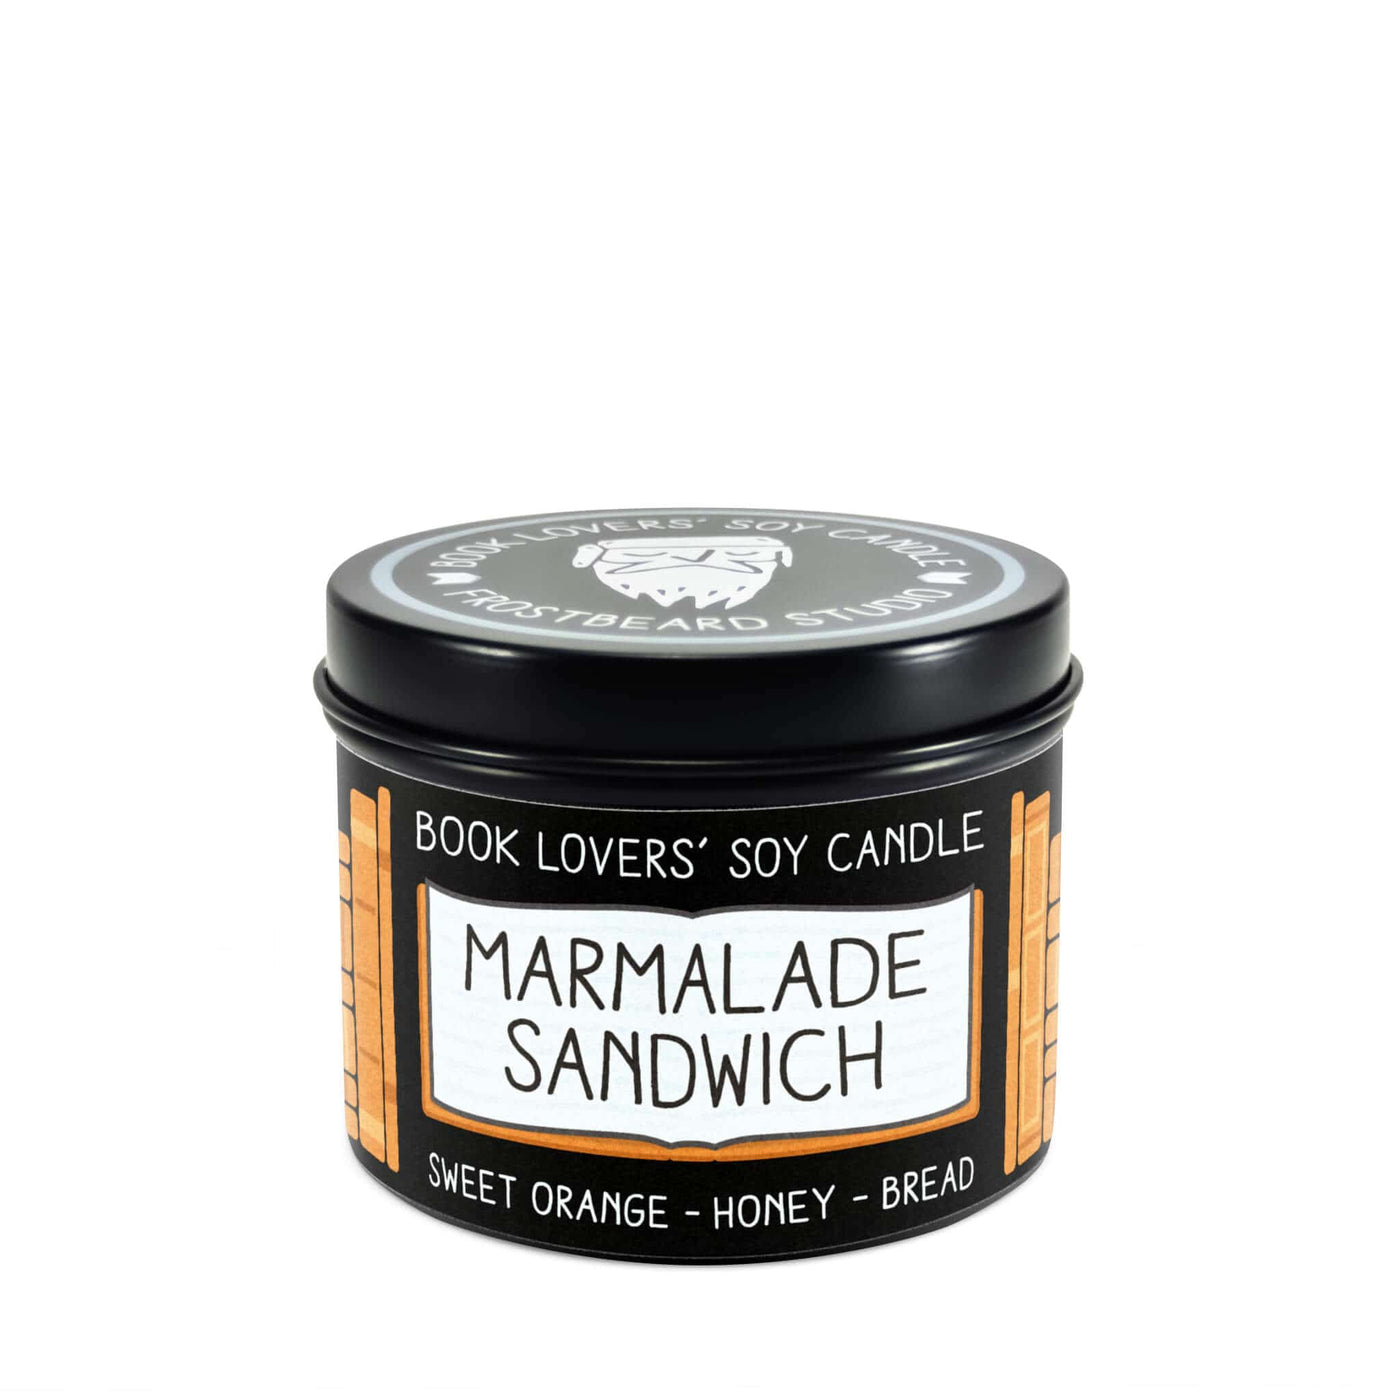 Marmalade Sandwich  -  4 oz Tin  -  Book Lovers' Soy Candle  -  Frostbeard Studio